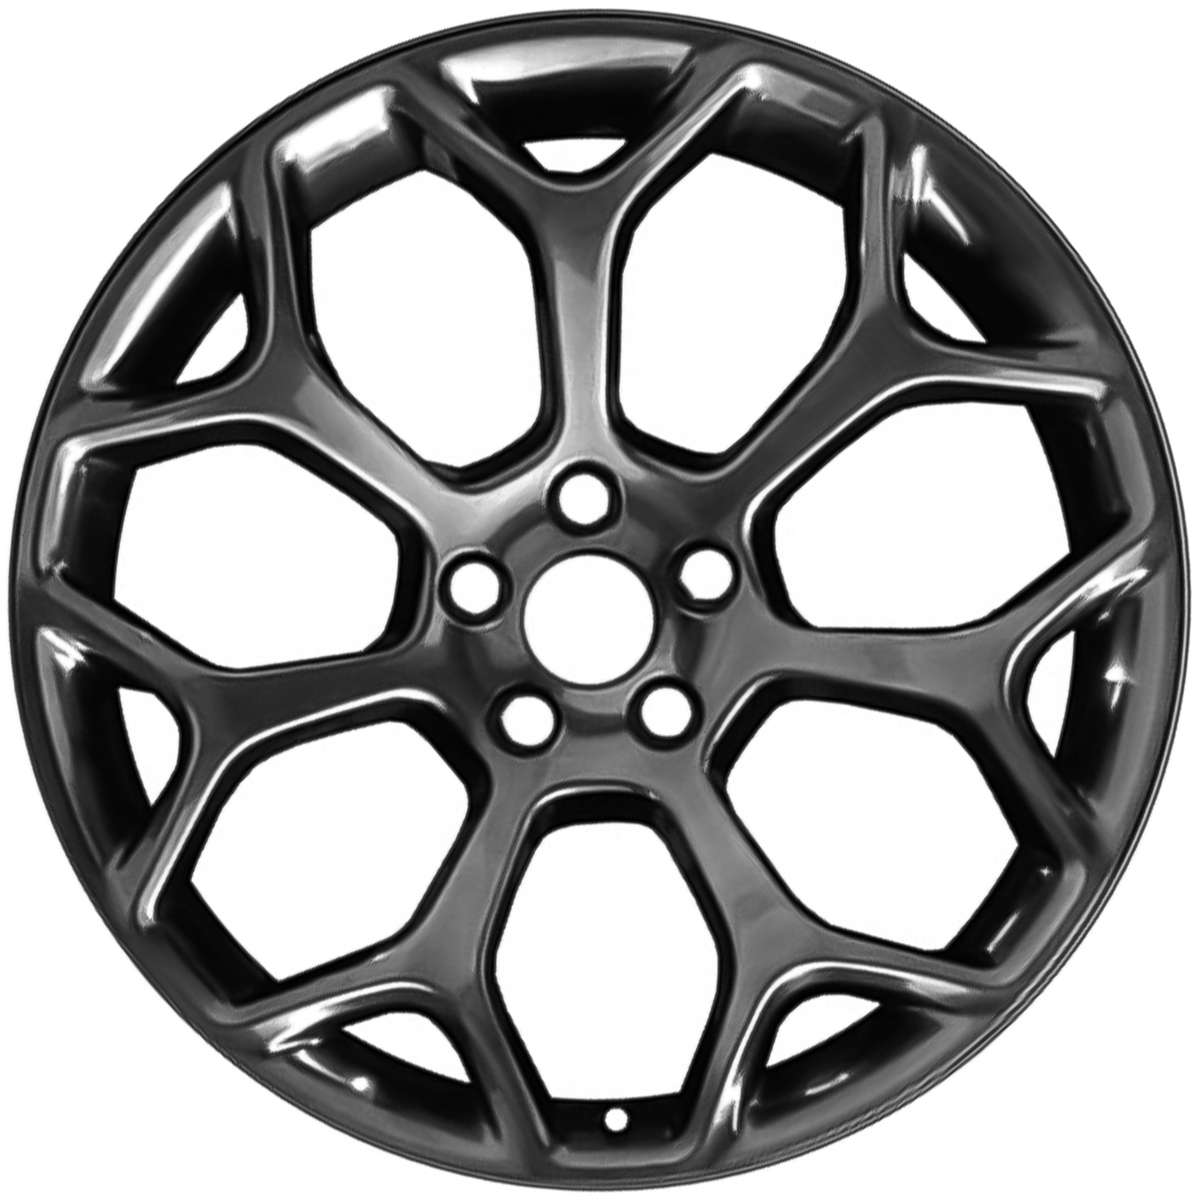 2020 Chrysler 300 19" OEM Wheel Rim W2537H